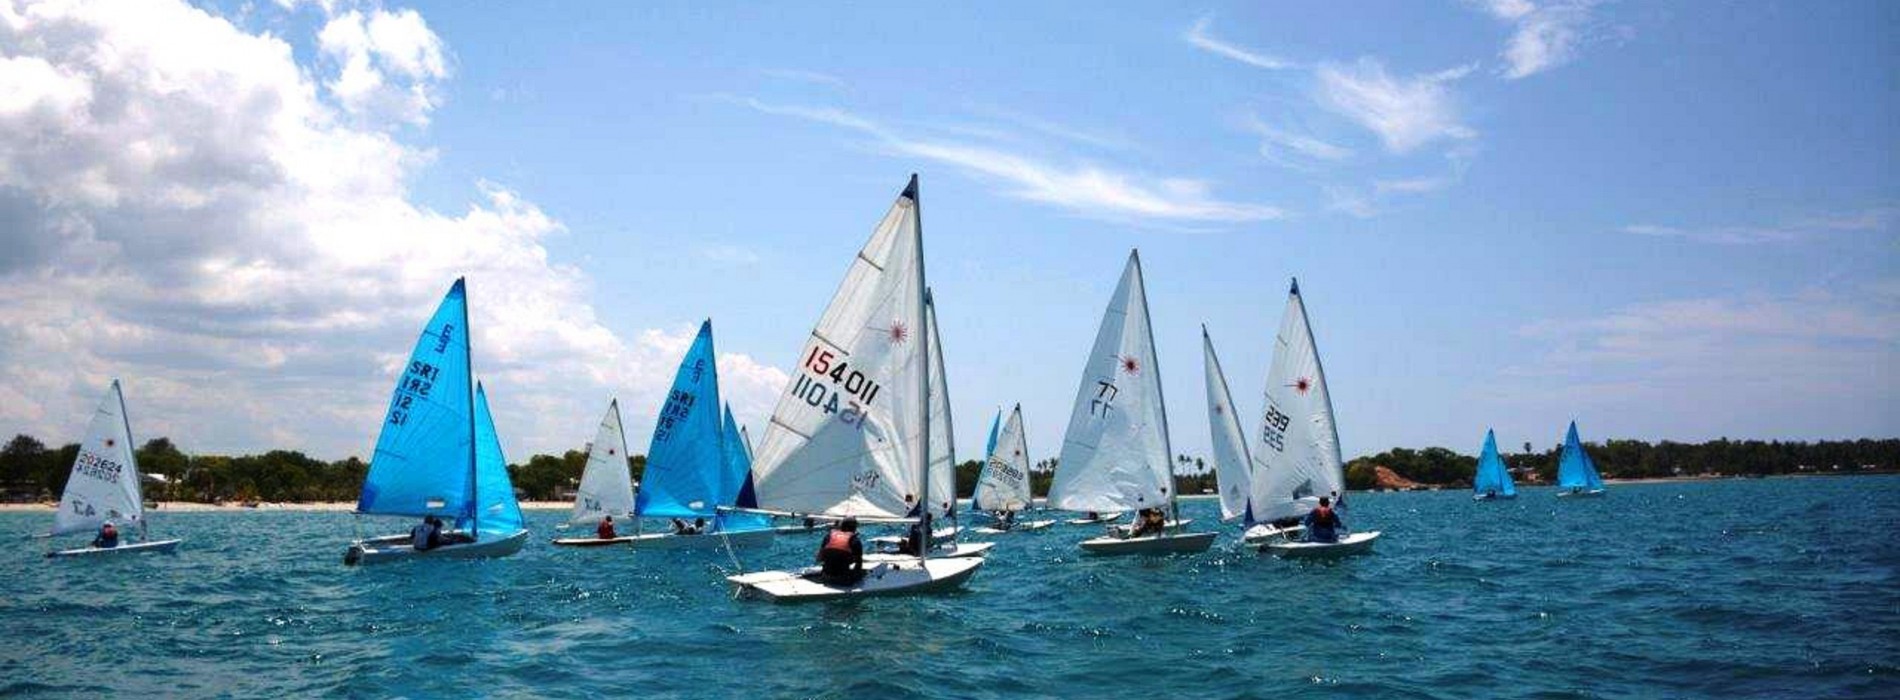 Trinco Blu by Cinnamon hosted the annual Sailing Regatta for the 9th consecutive year